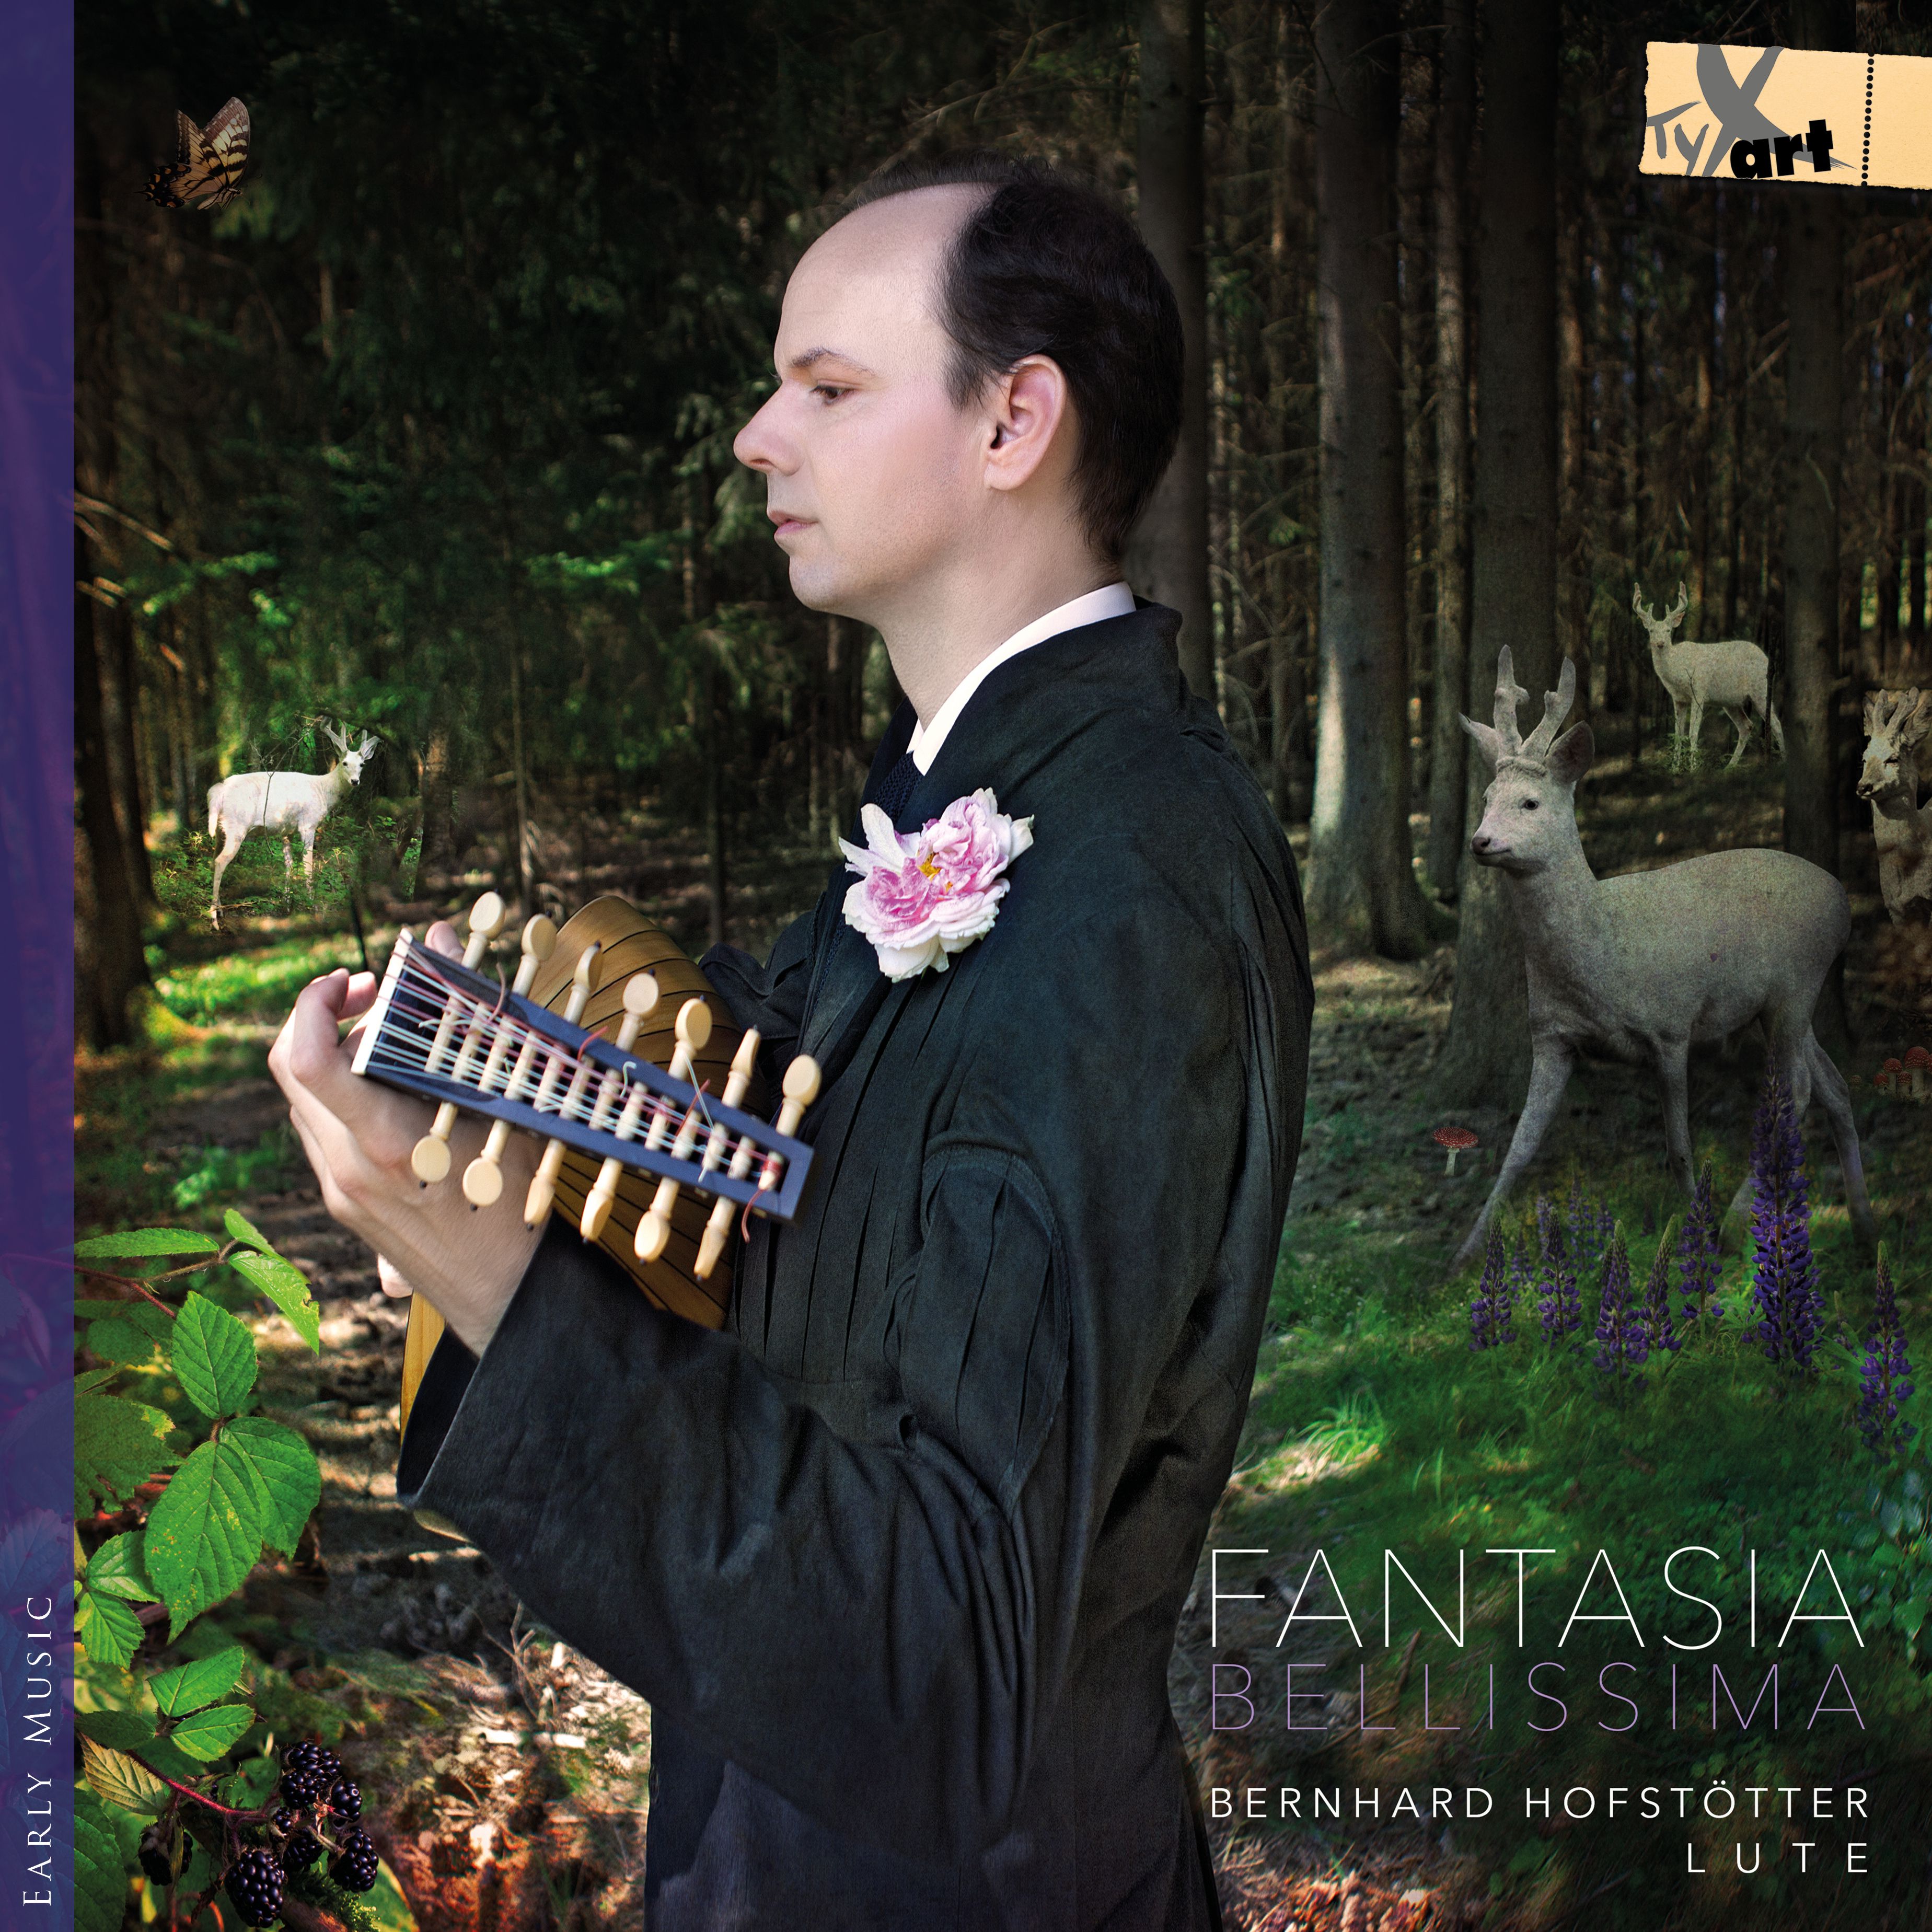 Fantasia Bellissima â€“ The Lviv Lute Tablature - Vinyl - Bernhard HofstÃ¶tter